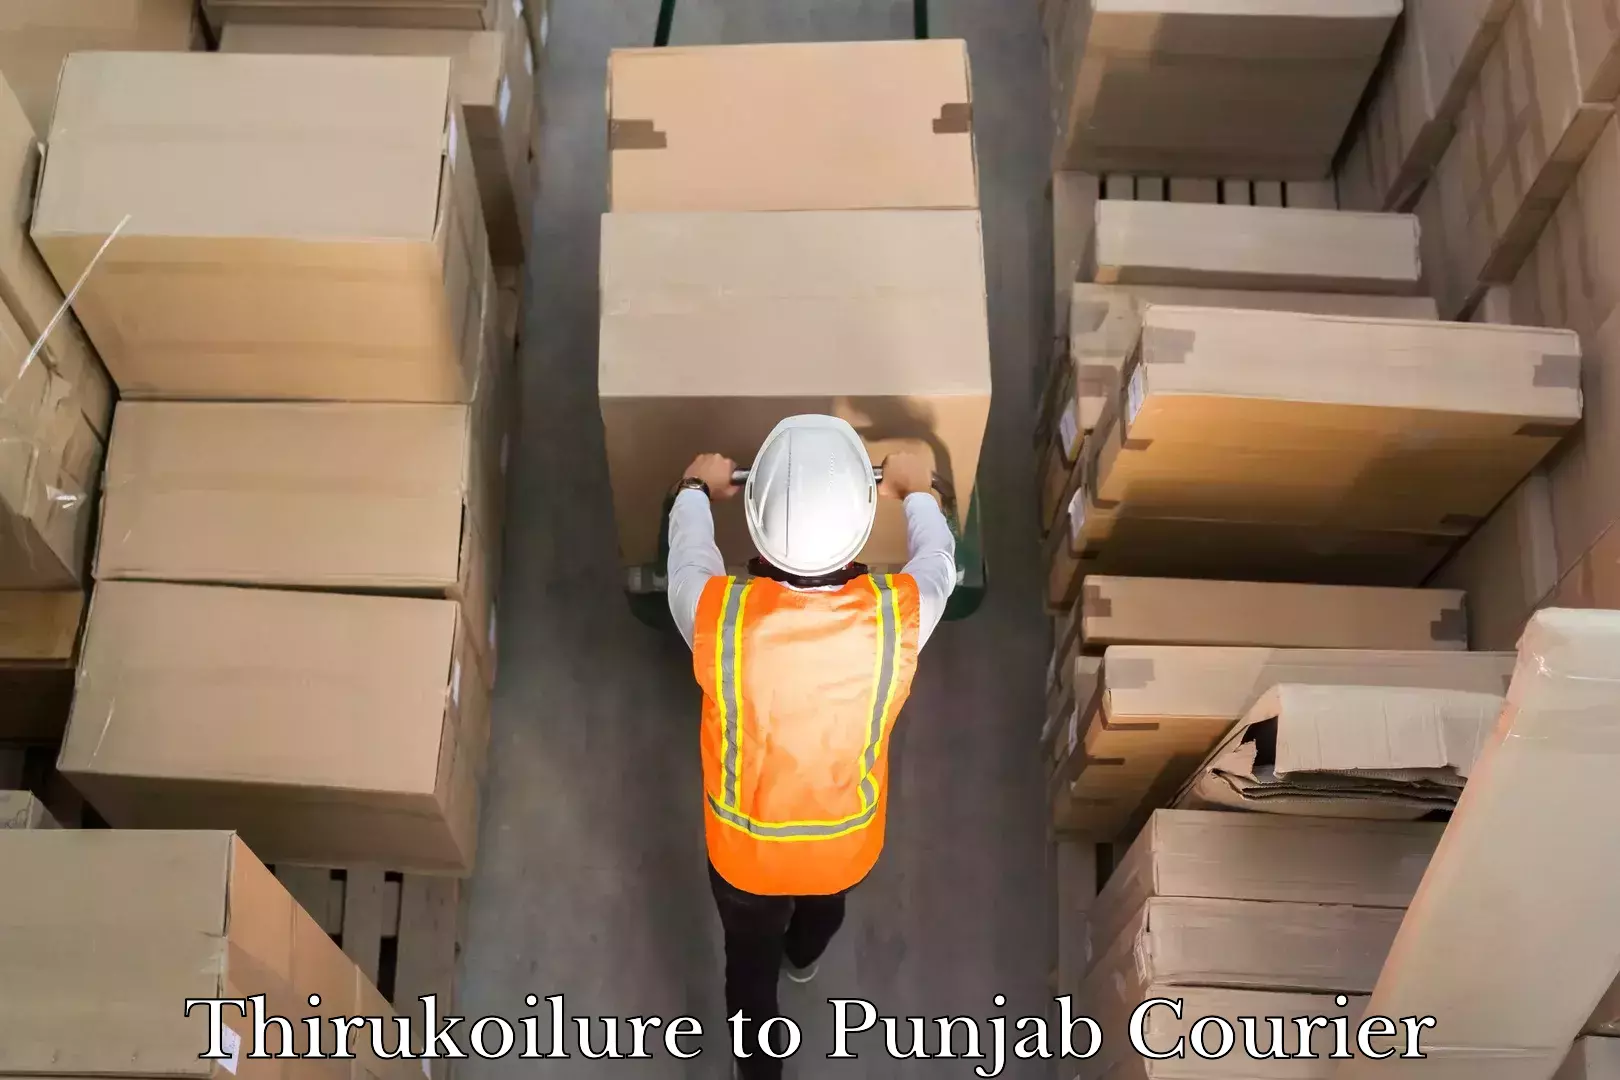 Logistics efficiency Thirukoilure to Punjab